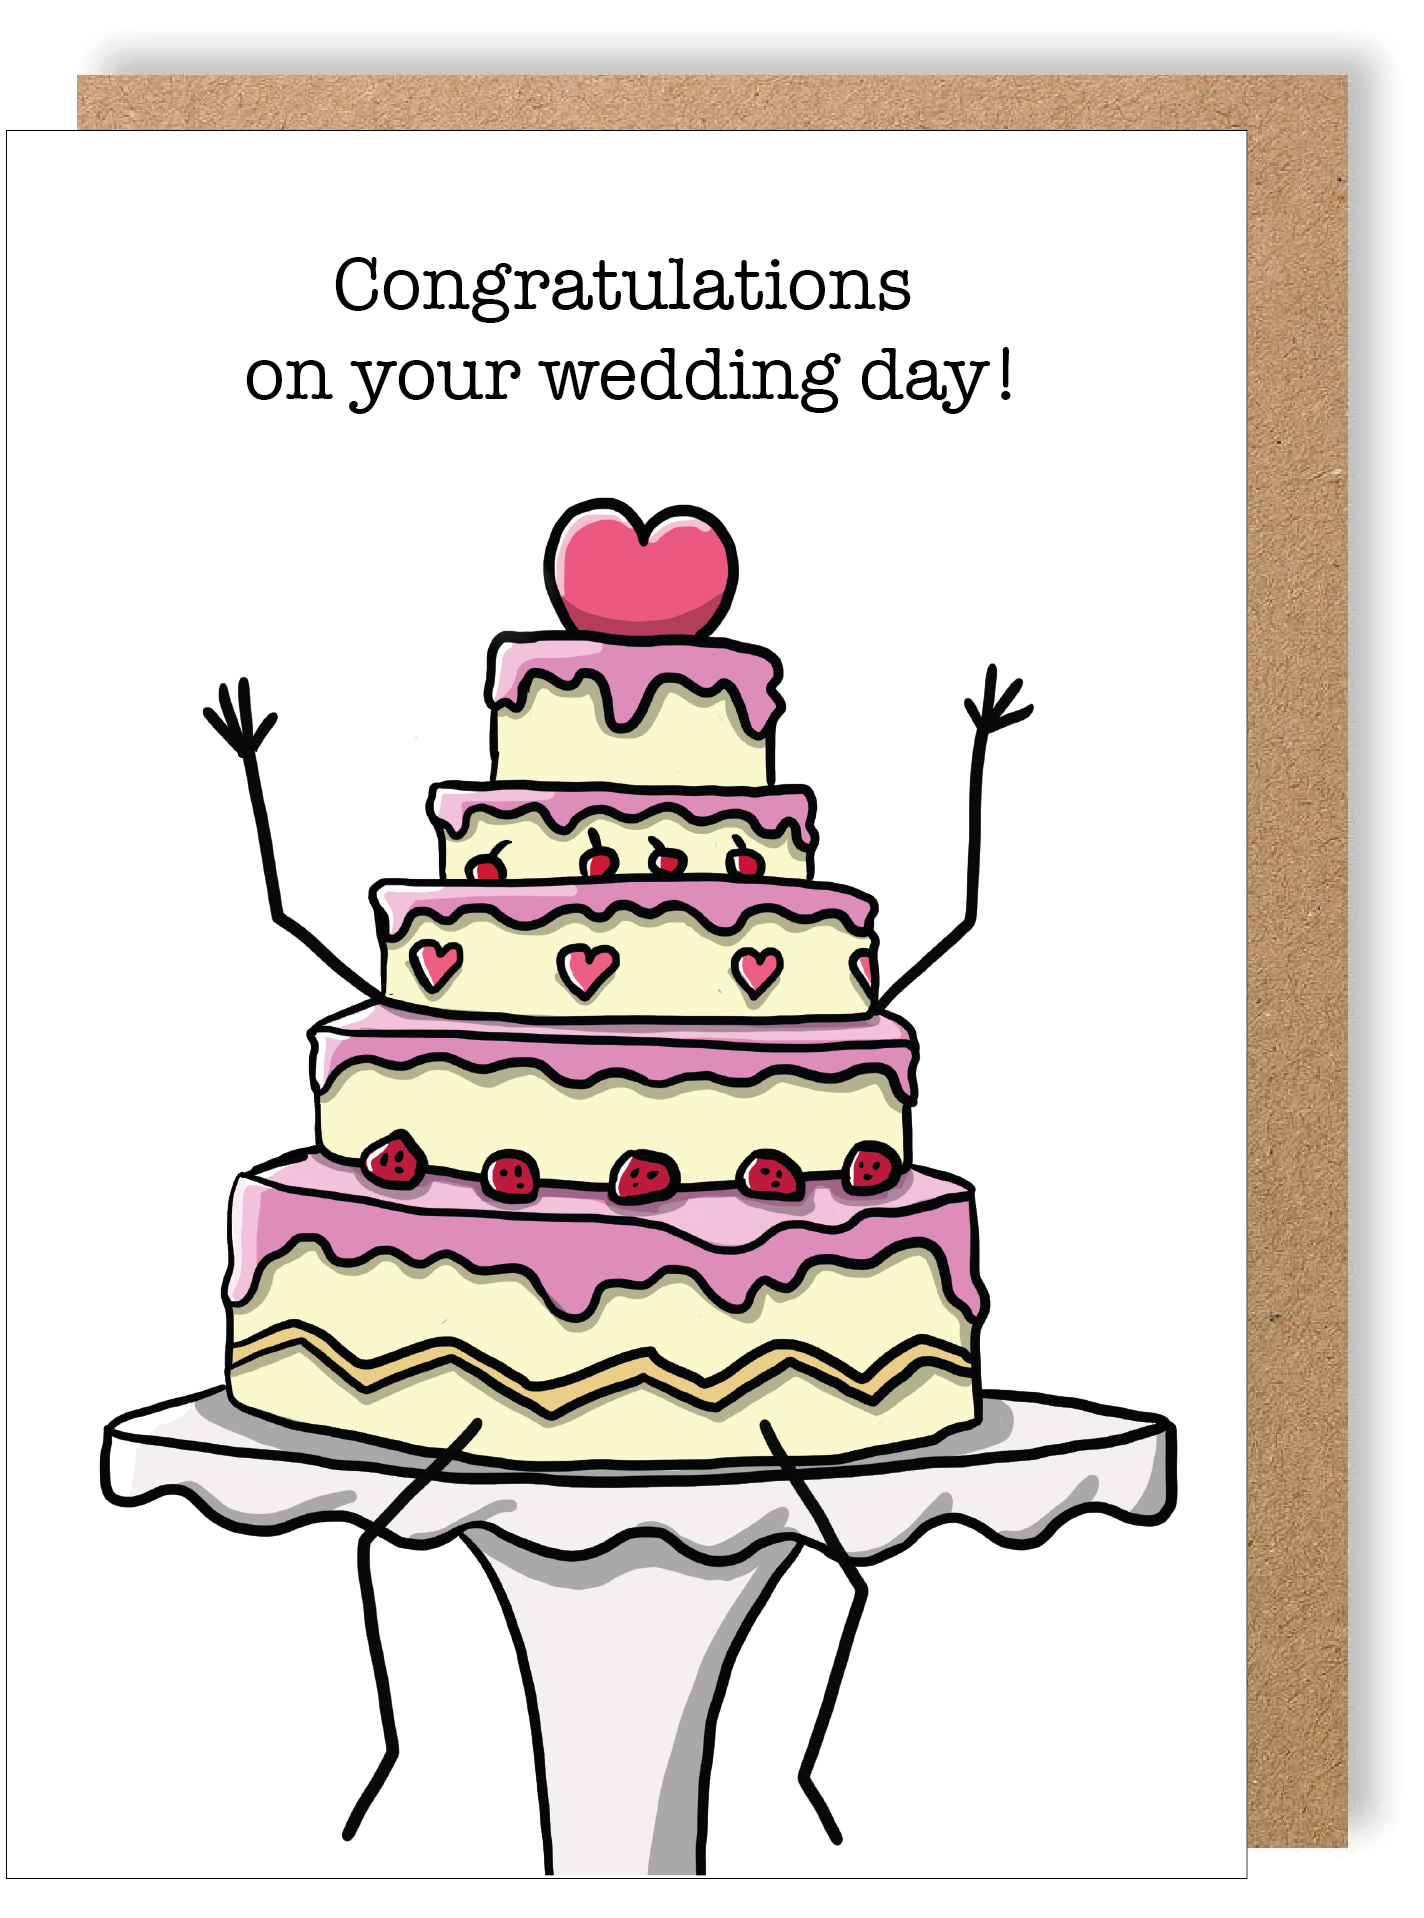 Congratulations - Wedding Cake - Greetings Card - LukeHorton Art